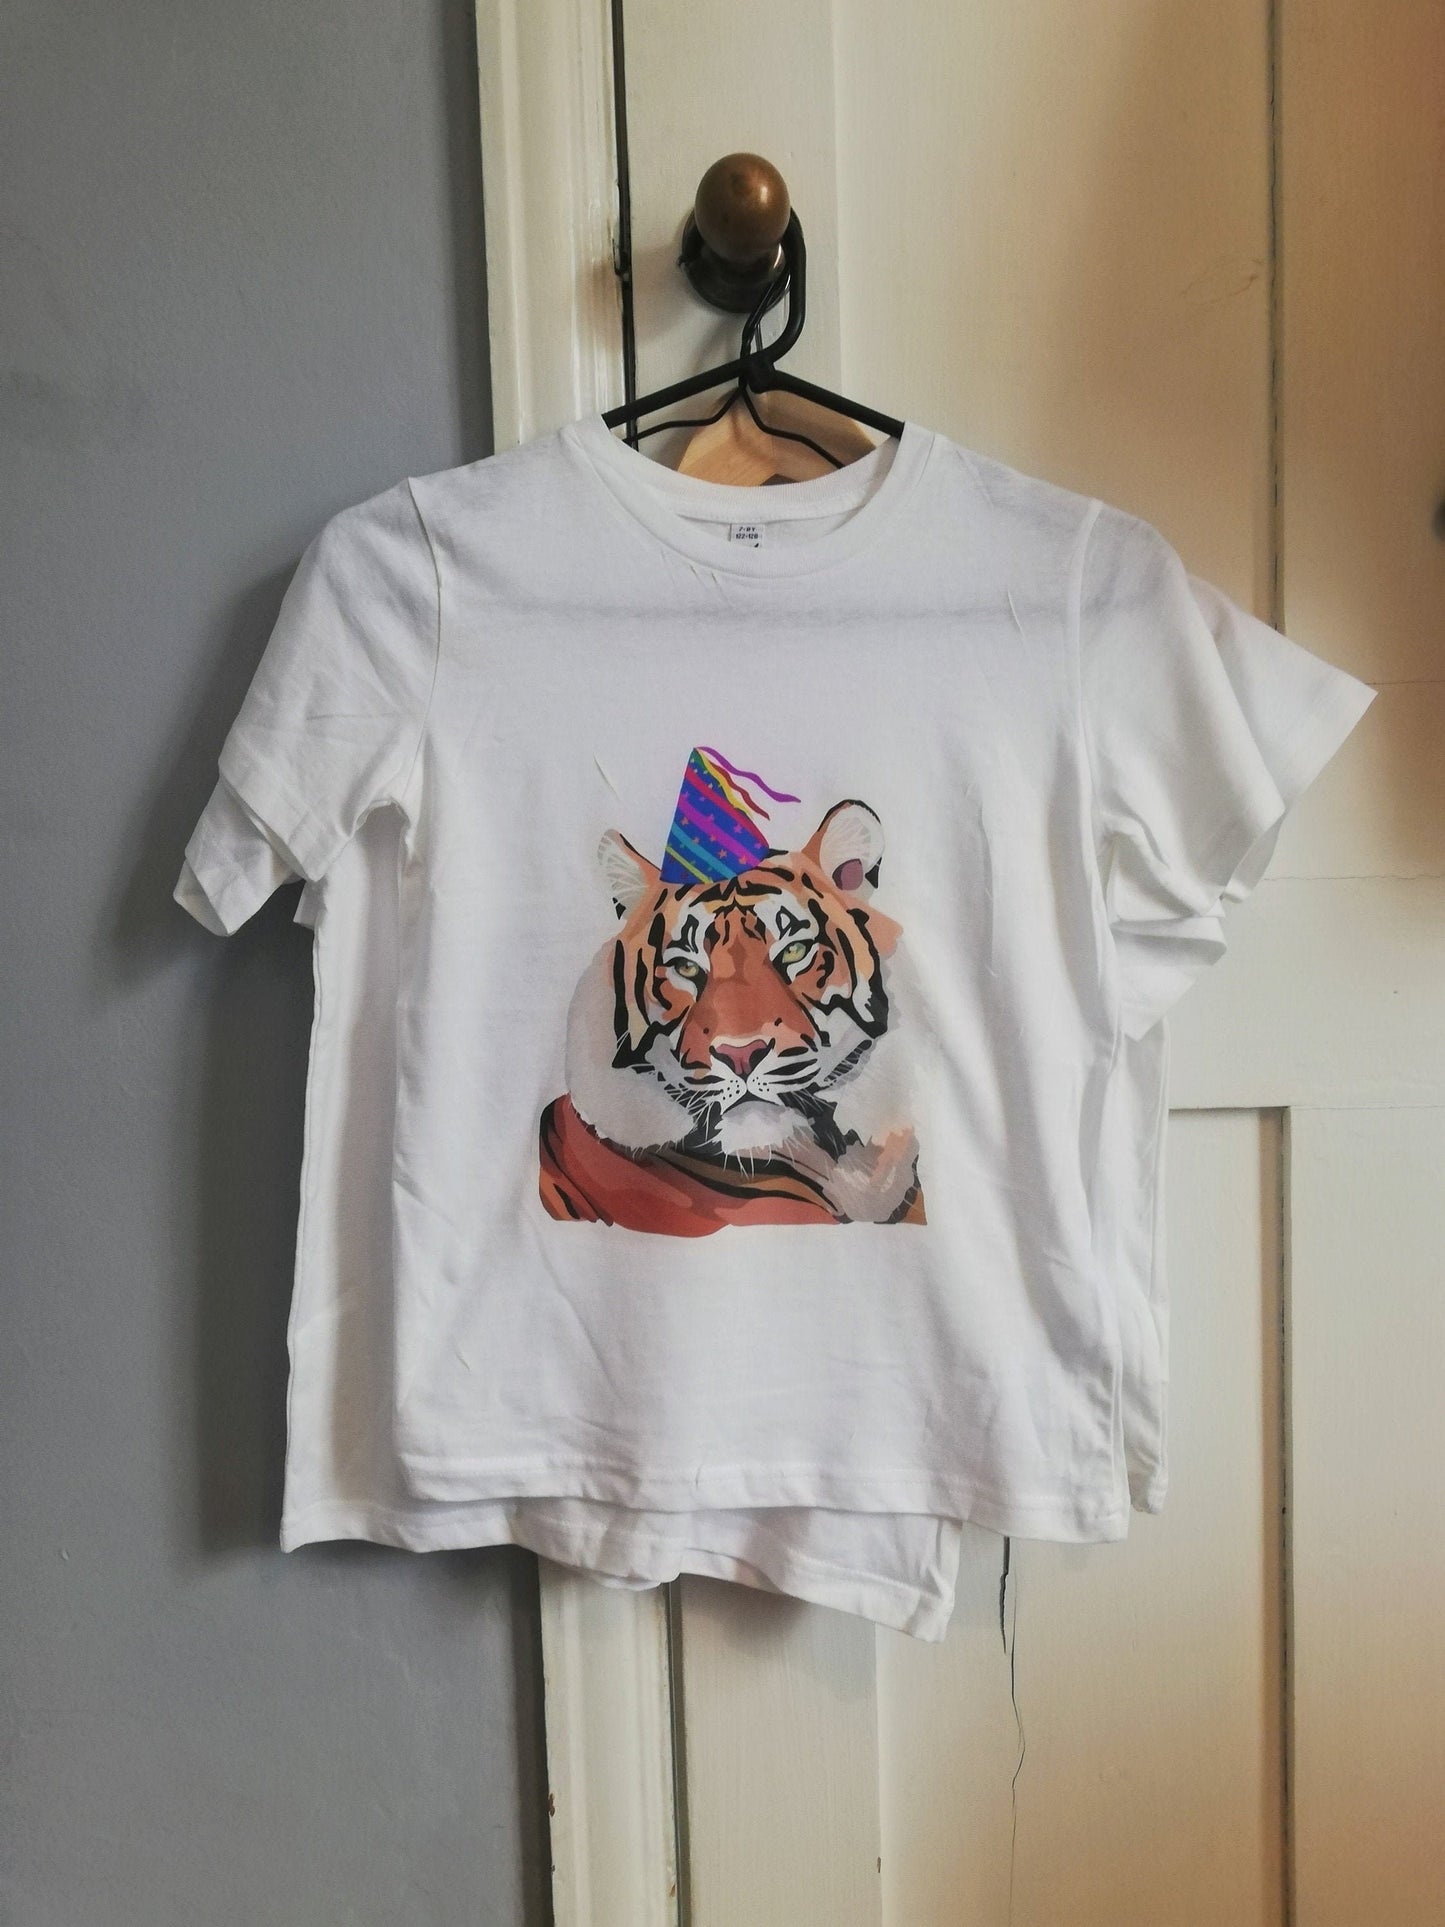 Party Tiger children's Tee shirt